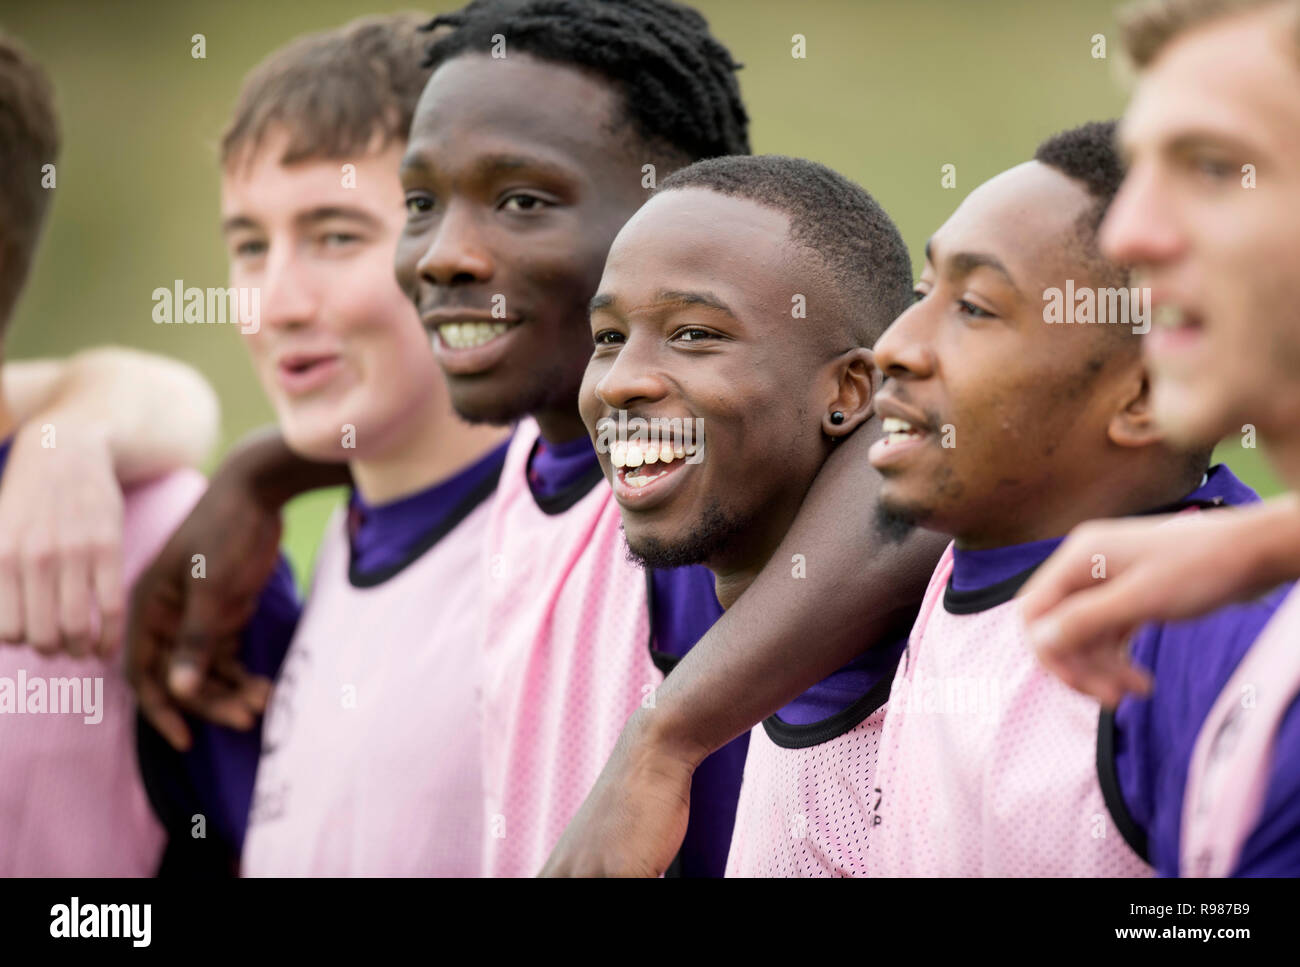 The Loughborough University first team football squad during training, UK 2018 Stock Photo